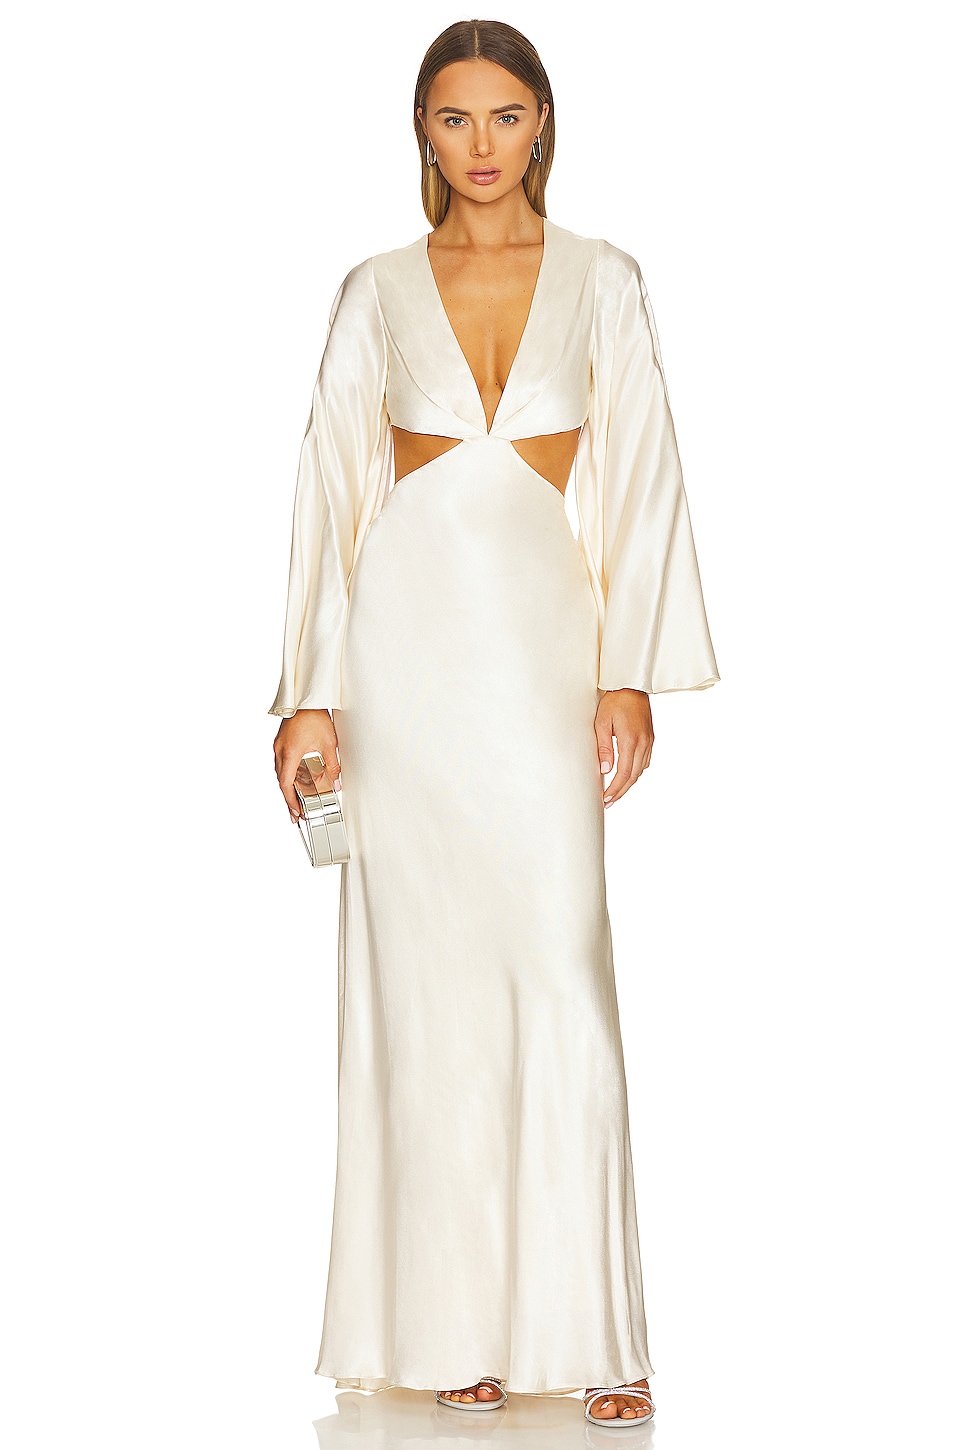 Shona Joy La Lune Flared Sleeve Open Back Maxi Dress in Cream